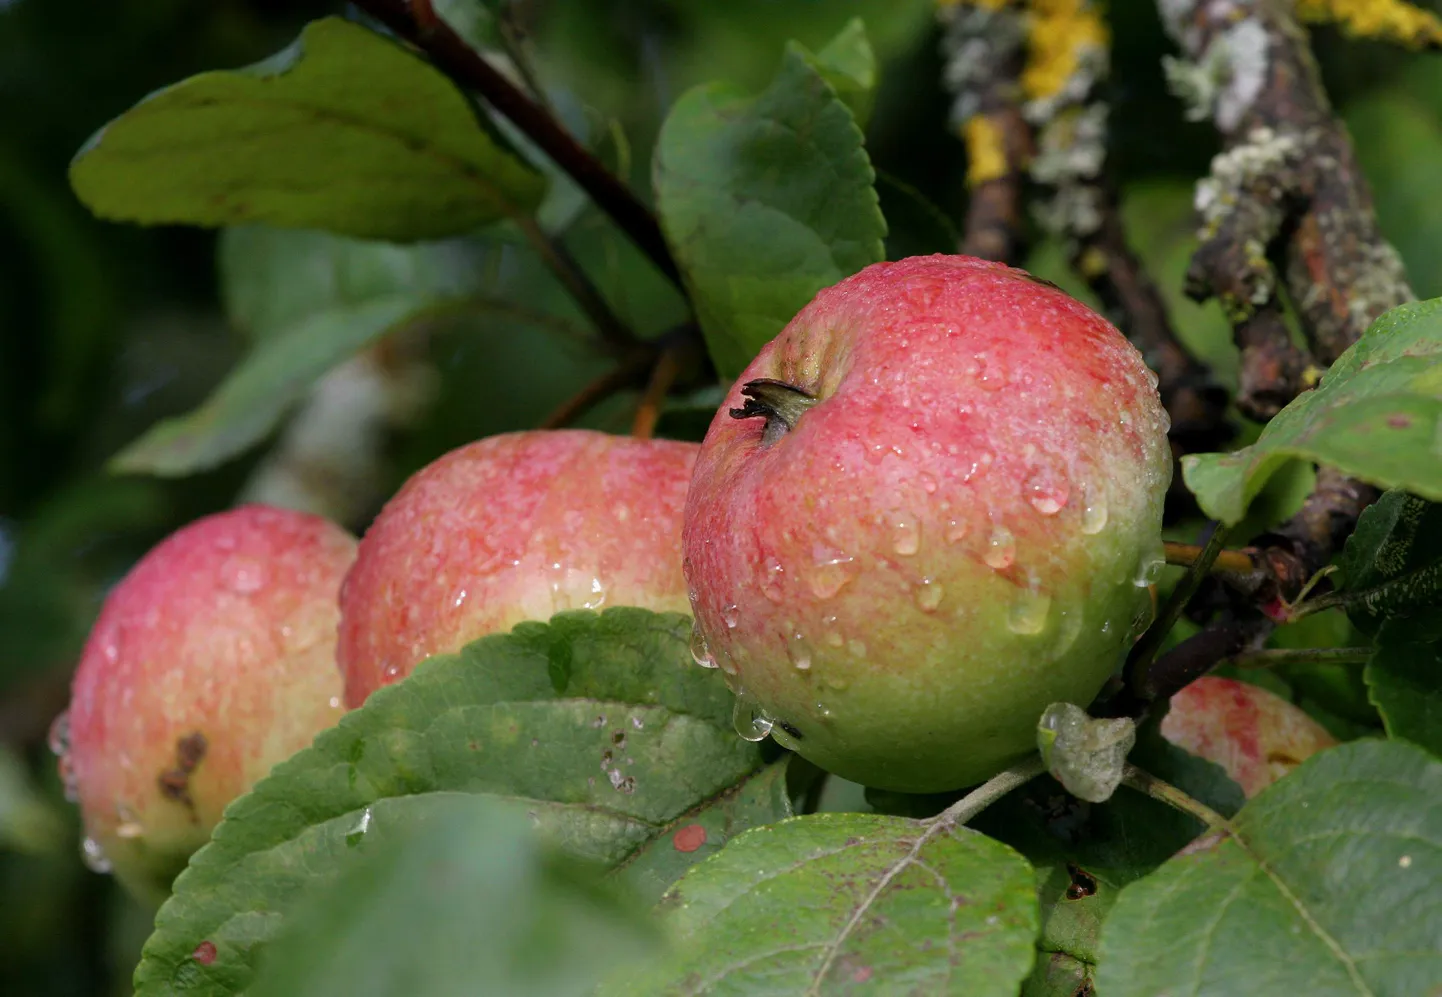 Sügisdessert valiti maitsvaima õuna konkursil kolmandaks.